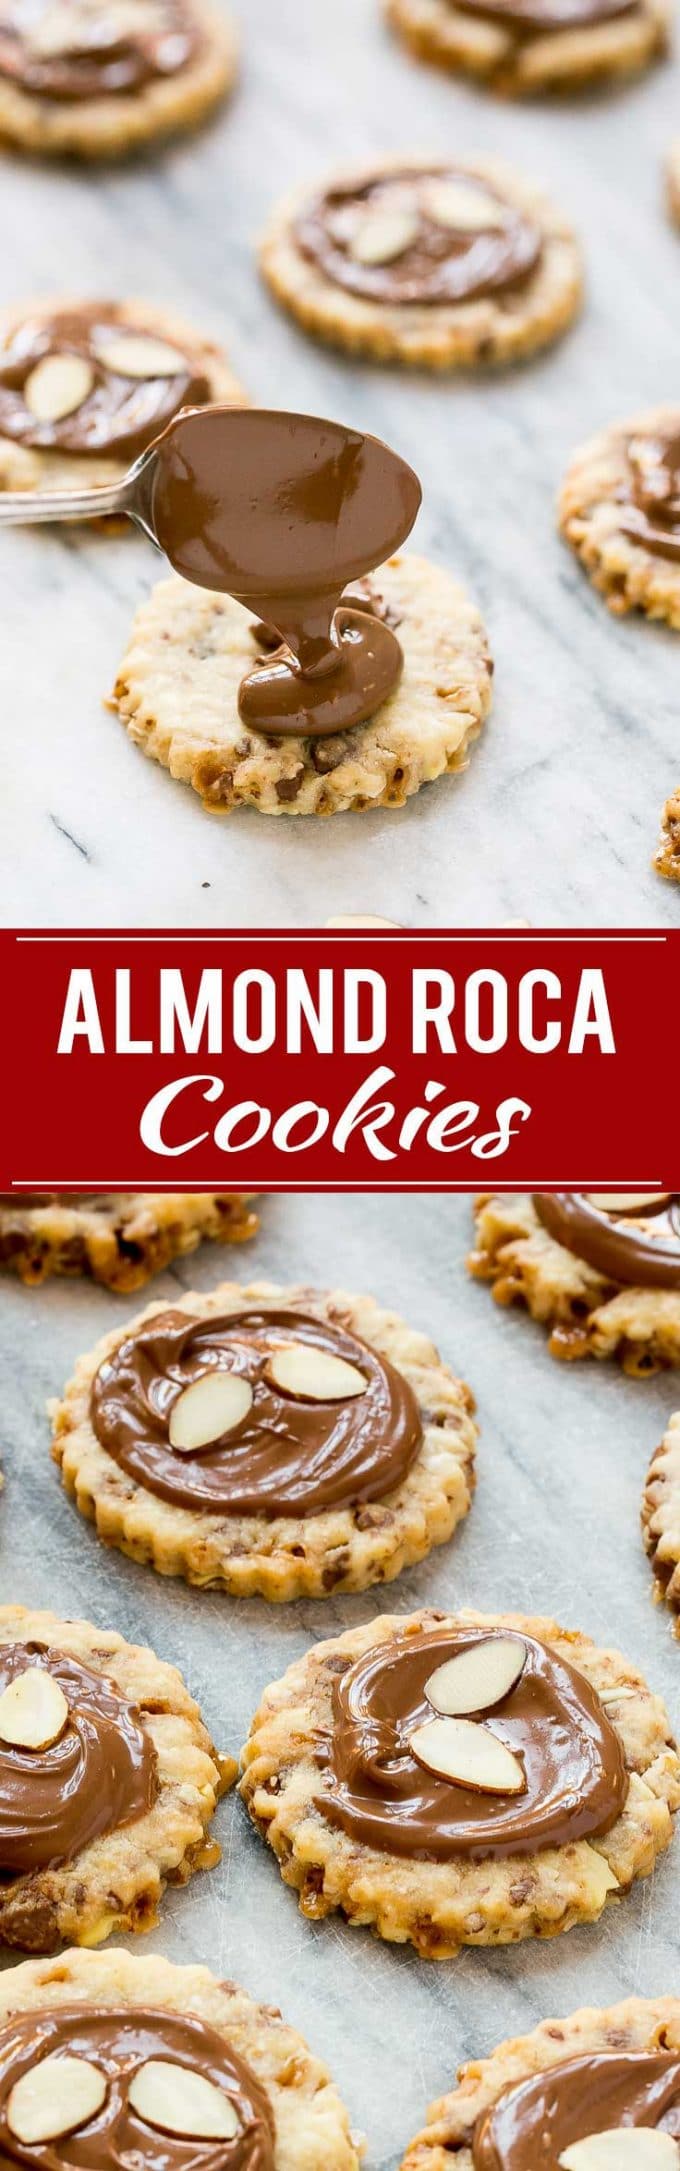 Almond Roca Cookie Recipe | Almond Roca Cookies | Almond Chocolate Cookies